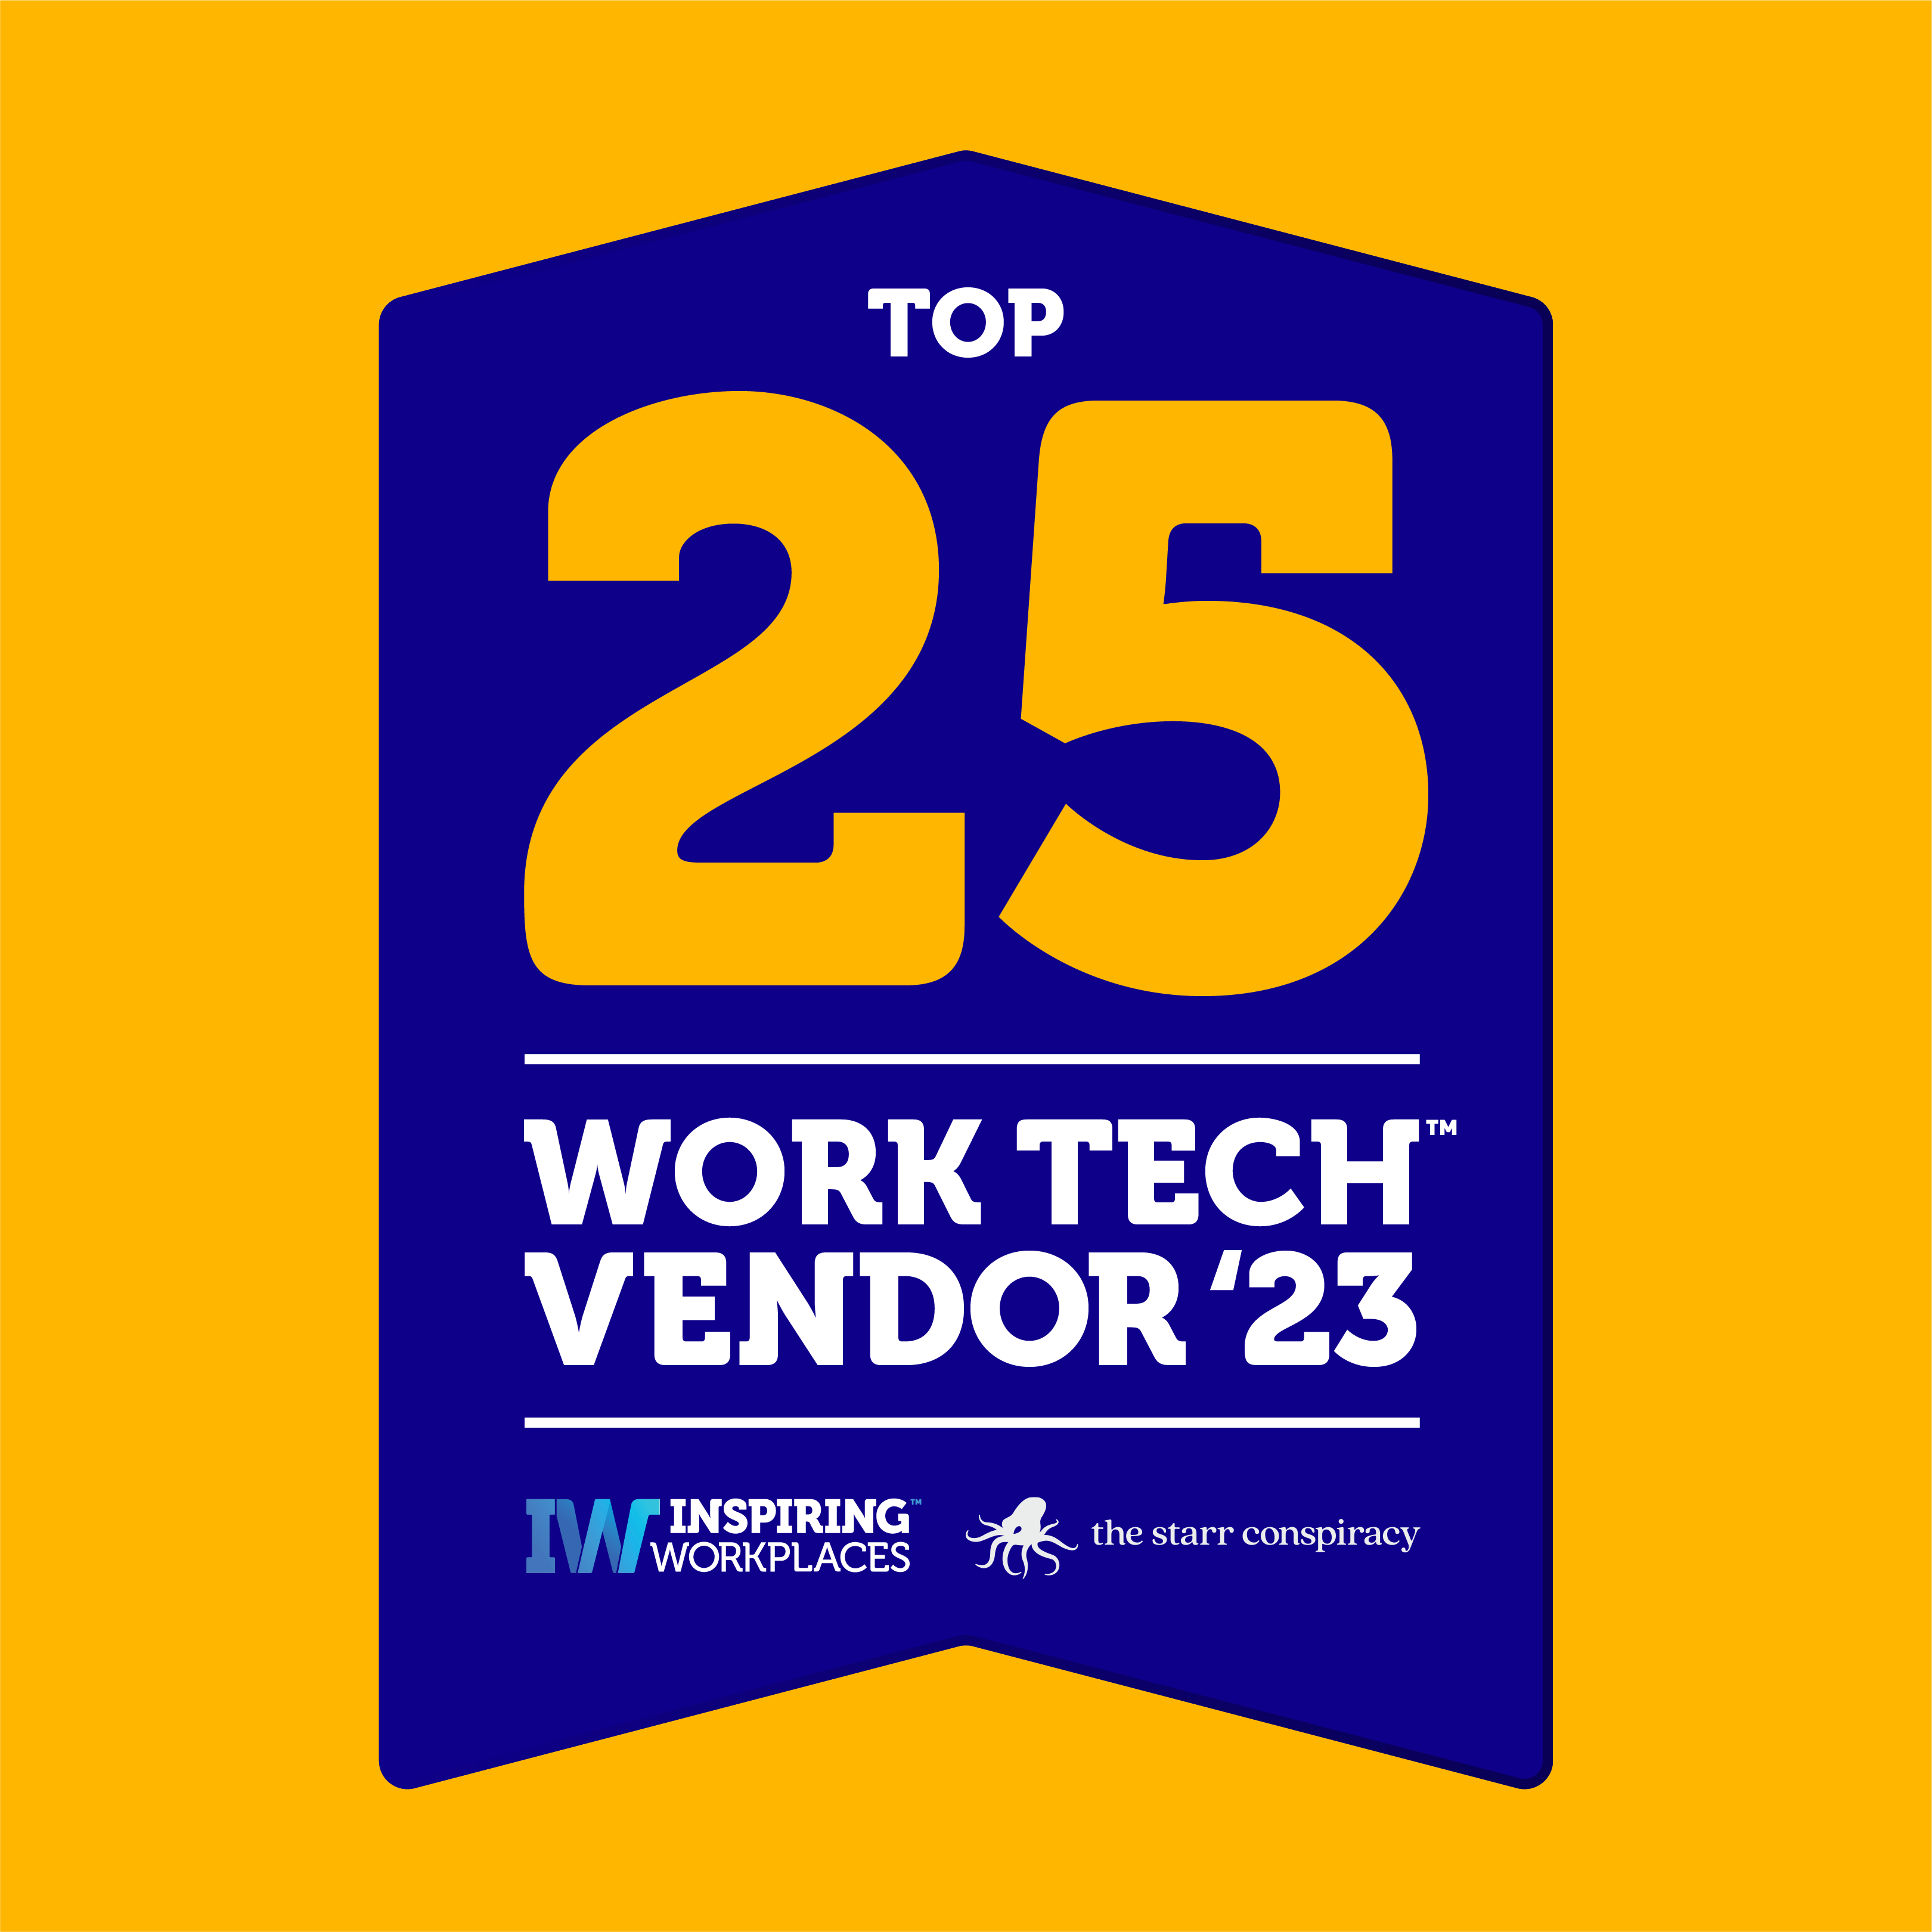 Top 25 Work Tech Vendor for 2023